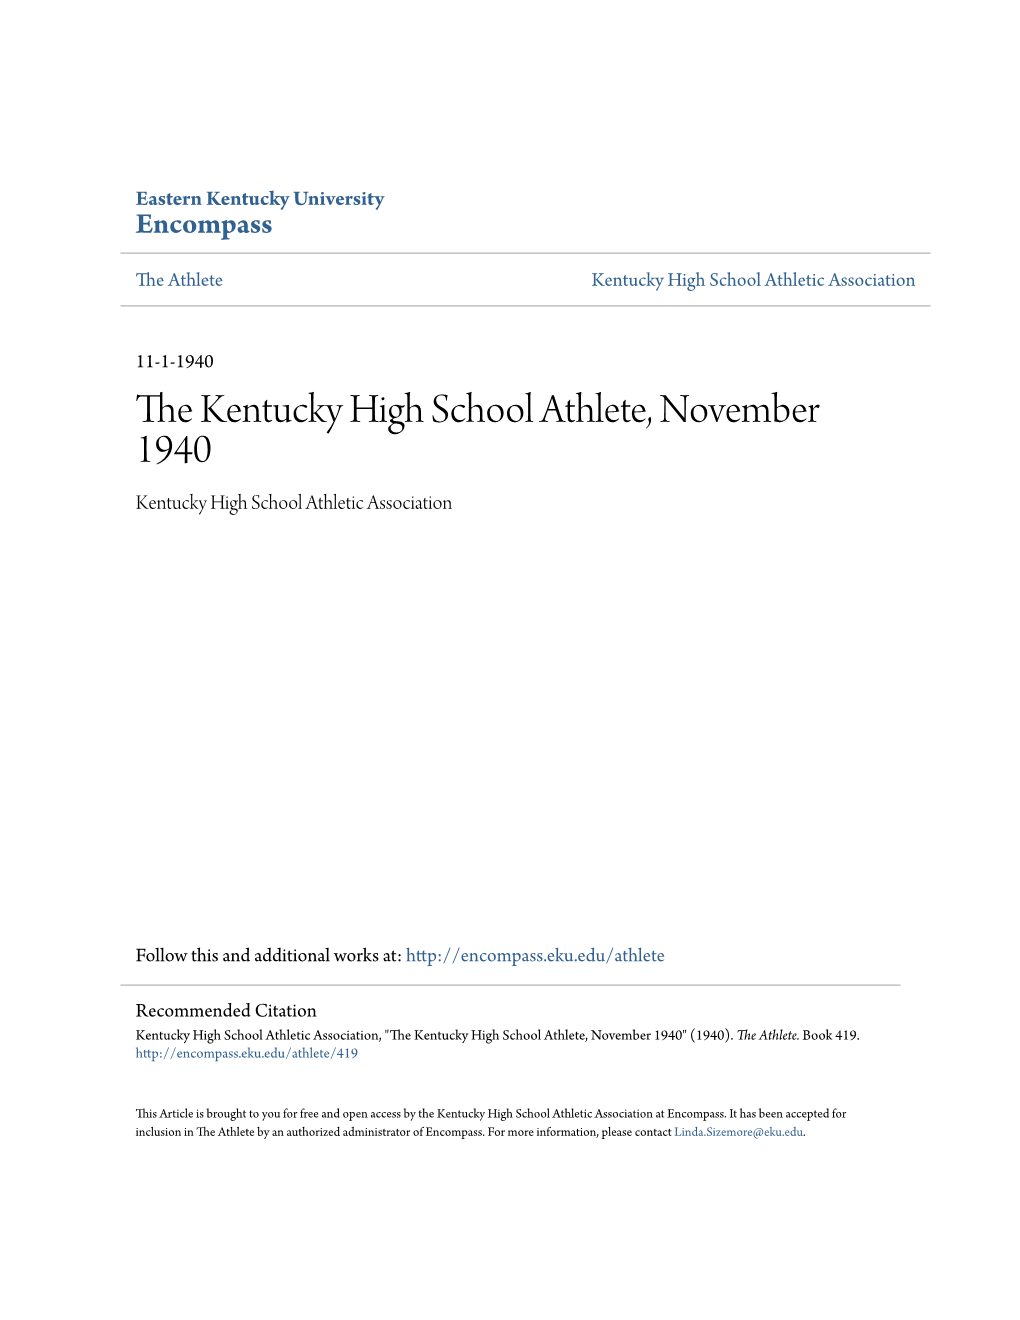 The Kentucky High School Athlete, November 1940 Kentucky High School Athletic Association